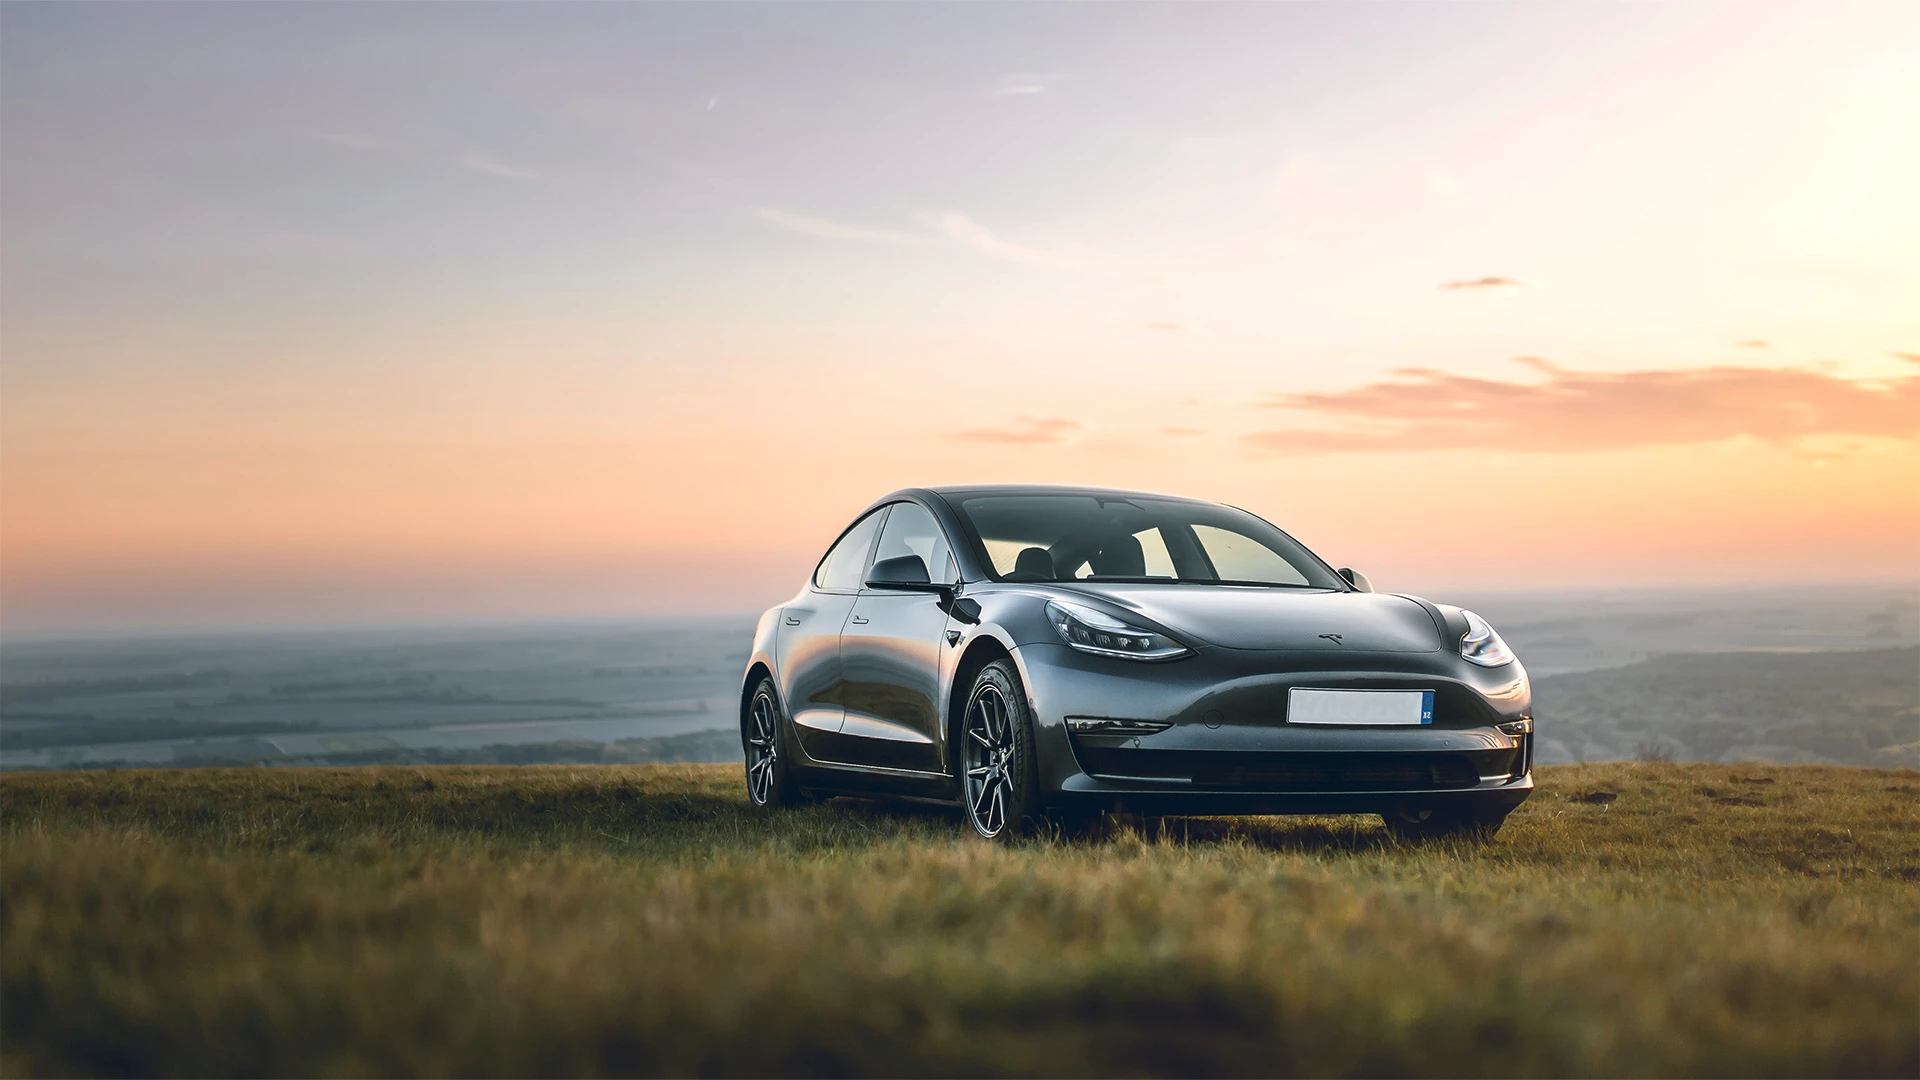 Grey Tesla in a field with sunrise